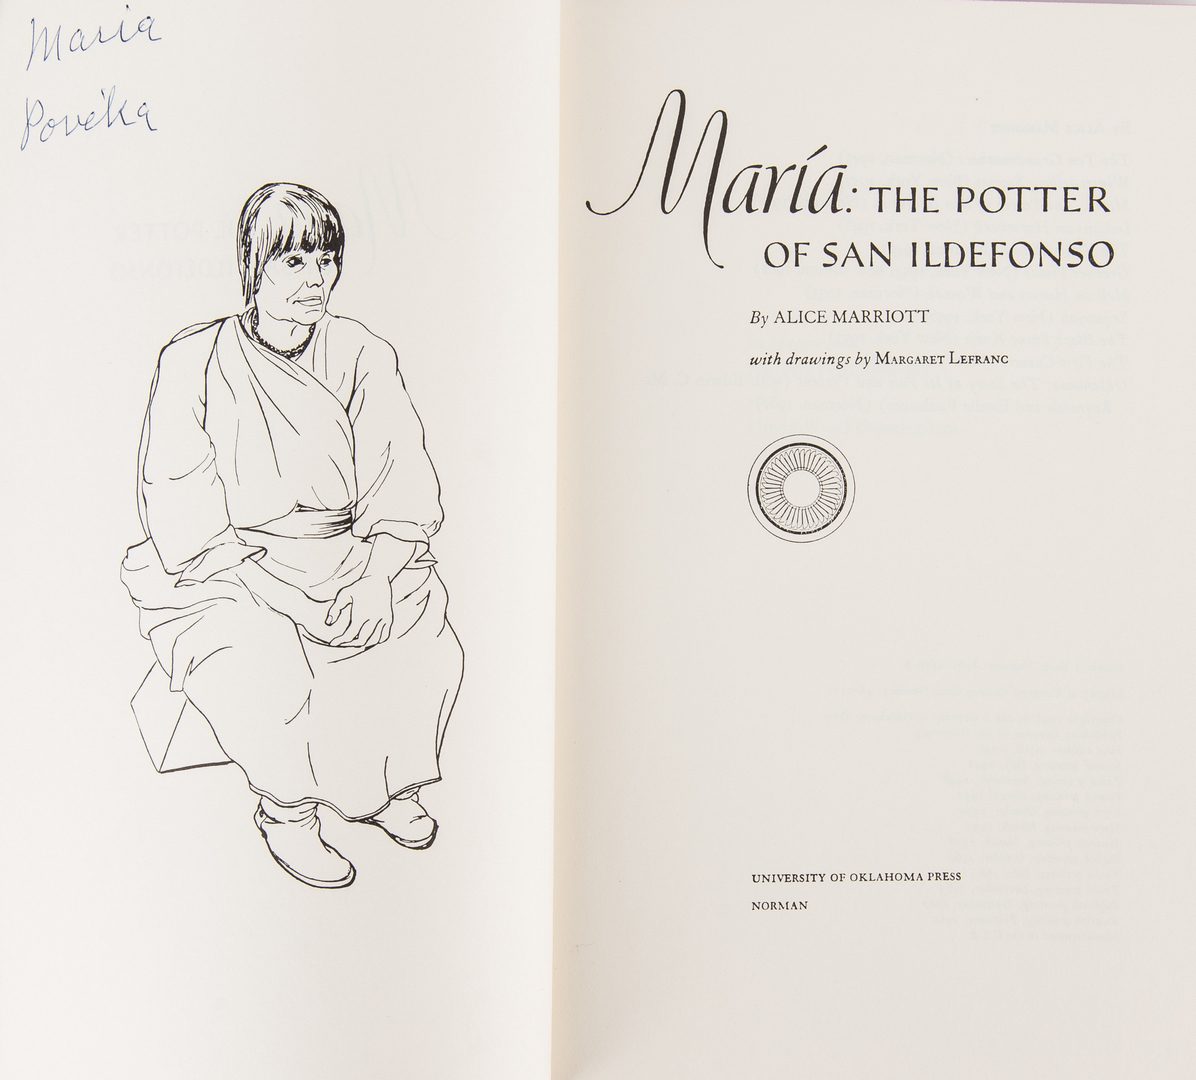 Lot 603: Maria Martinez bowl, miniature vase, portrait and book